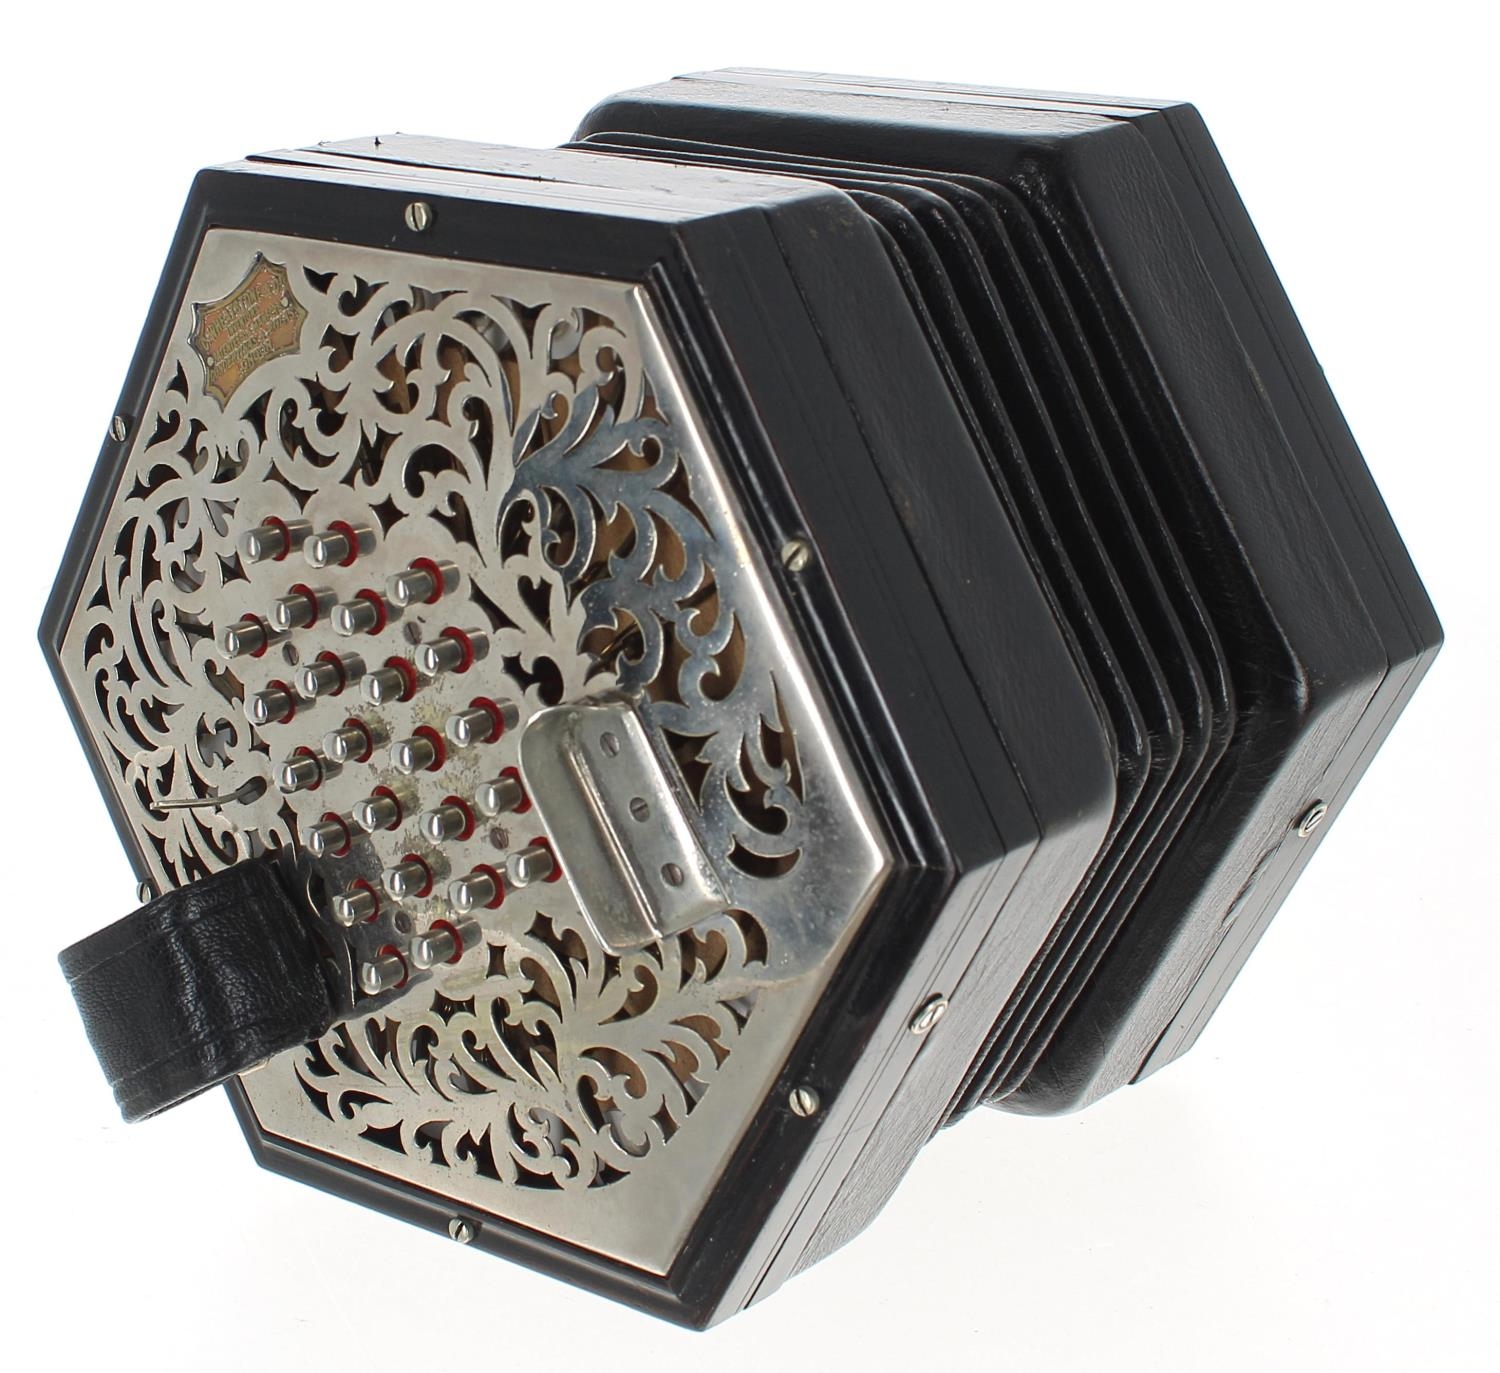 Good Wheatstone English system treble concertina, bearing the maker's metal trademark plate